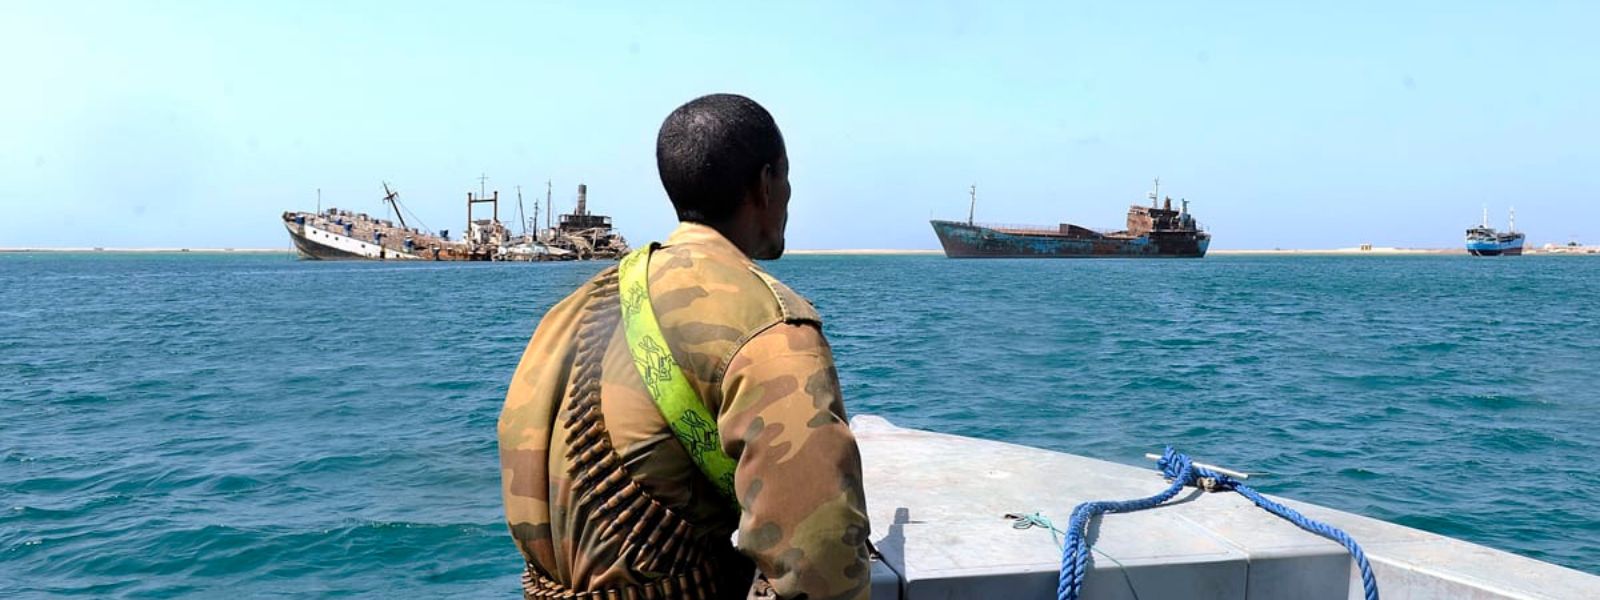 Negotiations with Somali Navy to free Sri Lankans